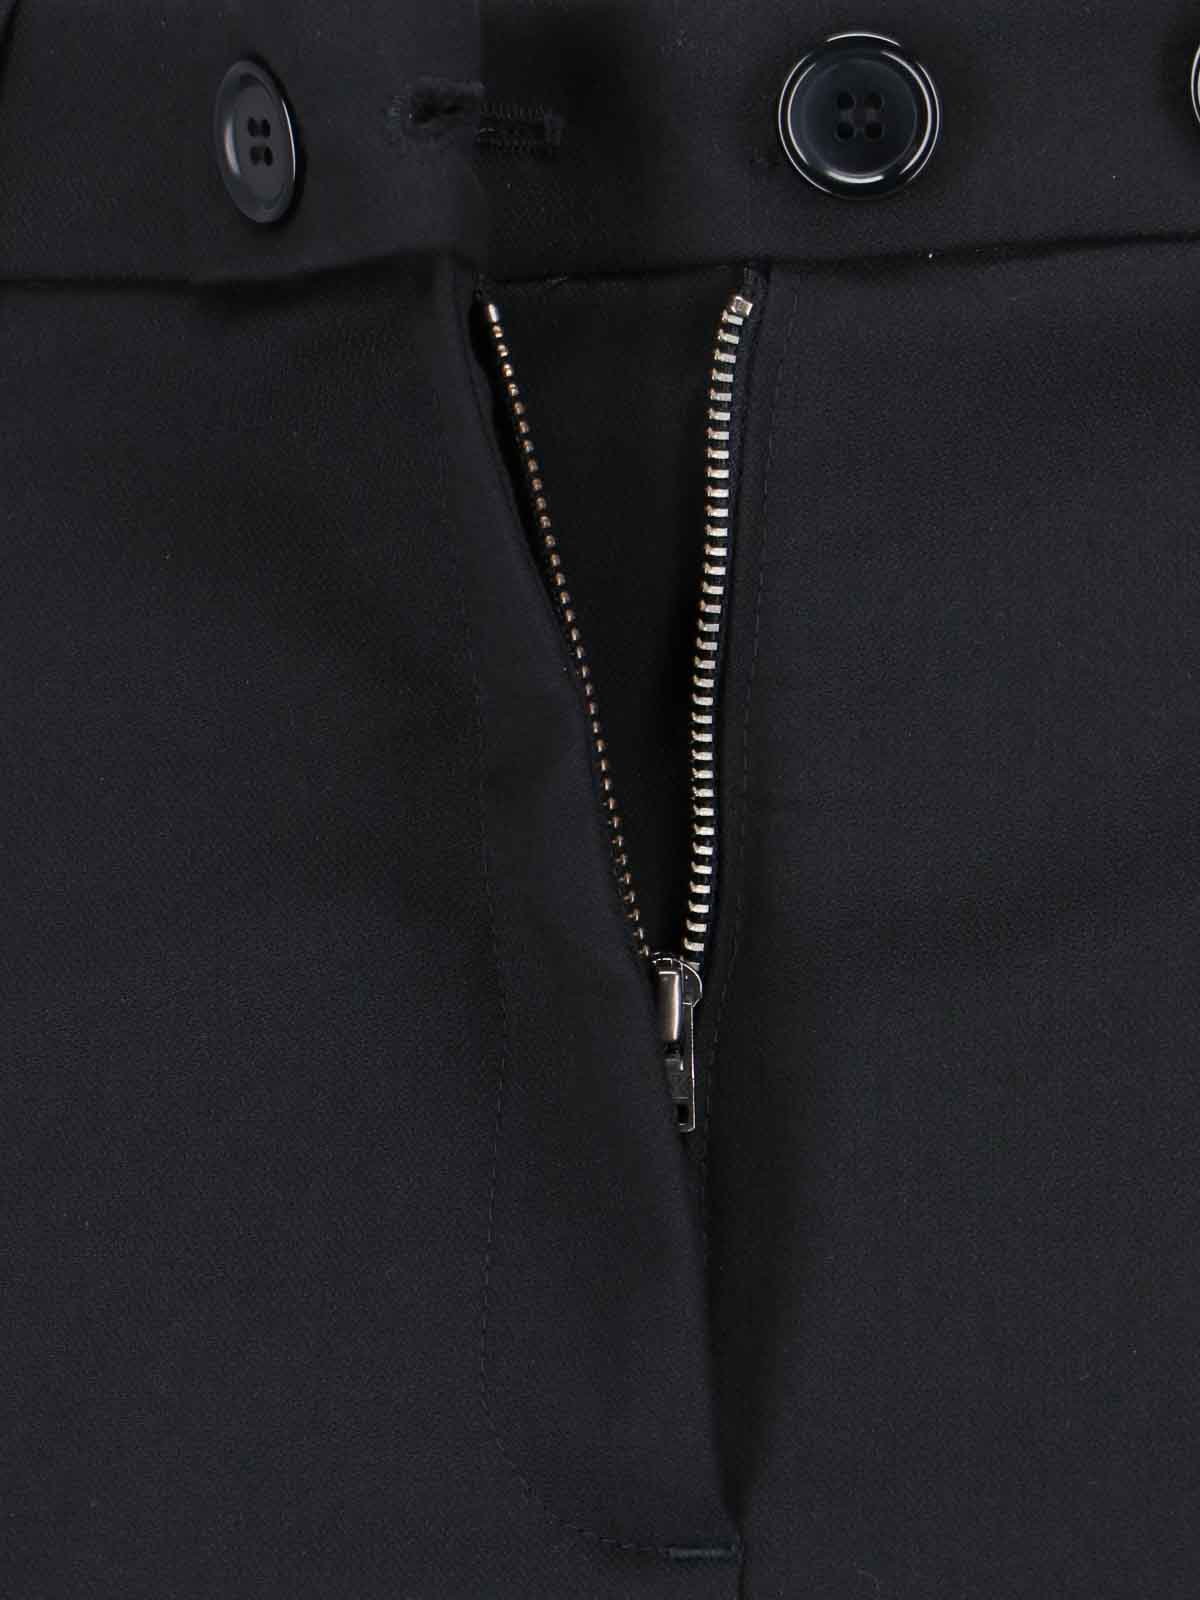 Shop The Garment Midi Skirt In Black